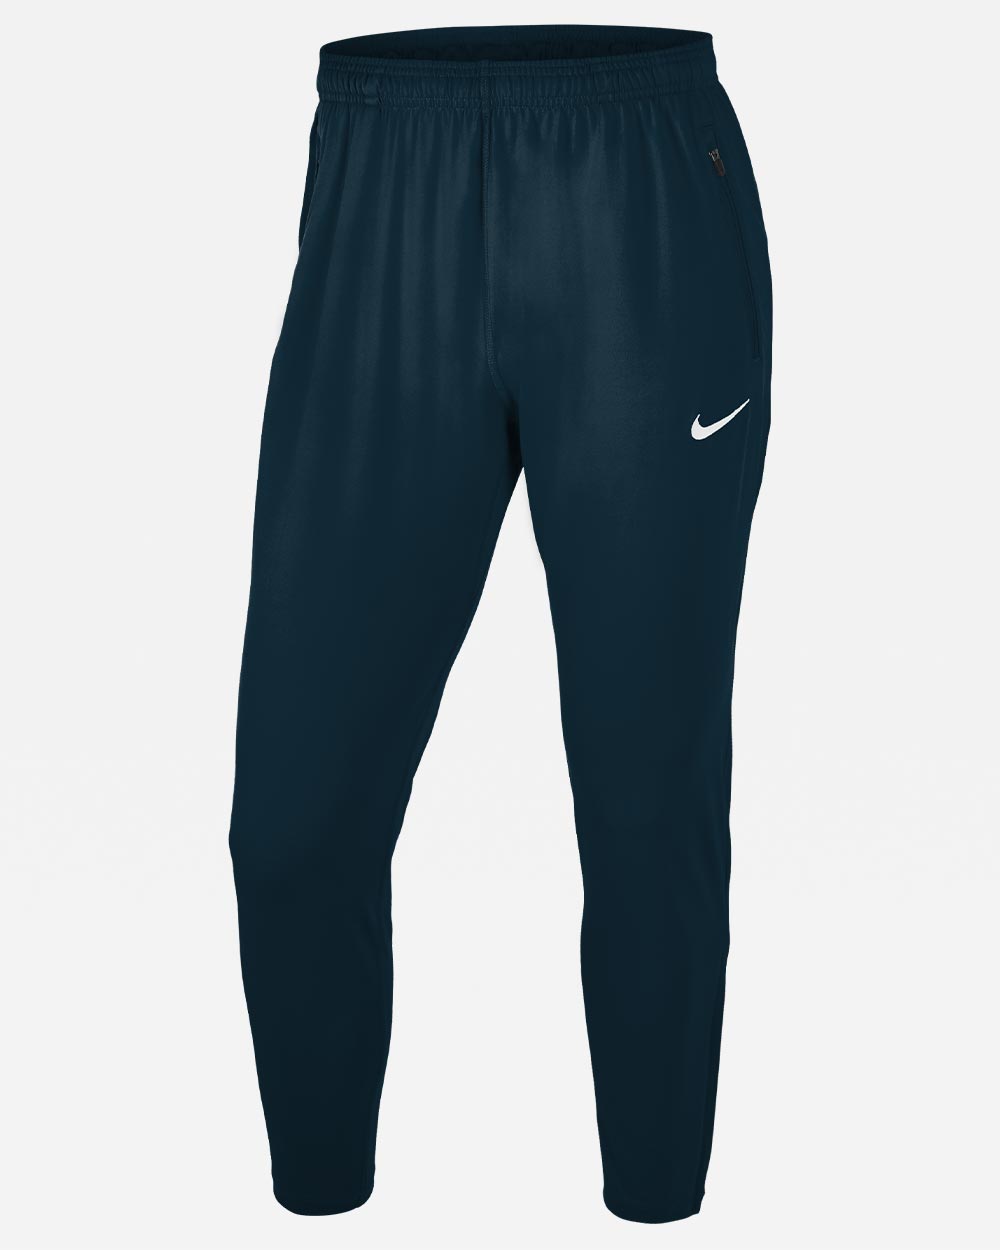 Pantalón de chándal Nike Dry Azul Marino Hombre - NT0317-451